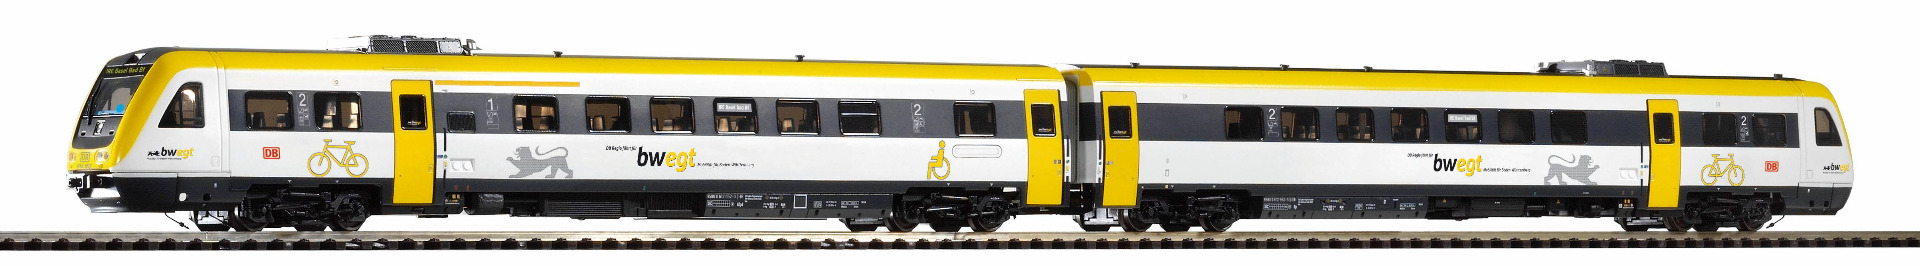 Piko 52007 H0 DB dieseltreinstel VT 612 Regioswinger 'bwegt', DC dss